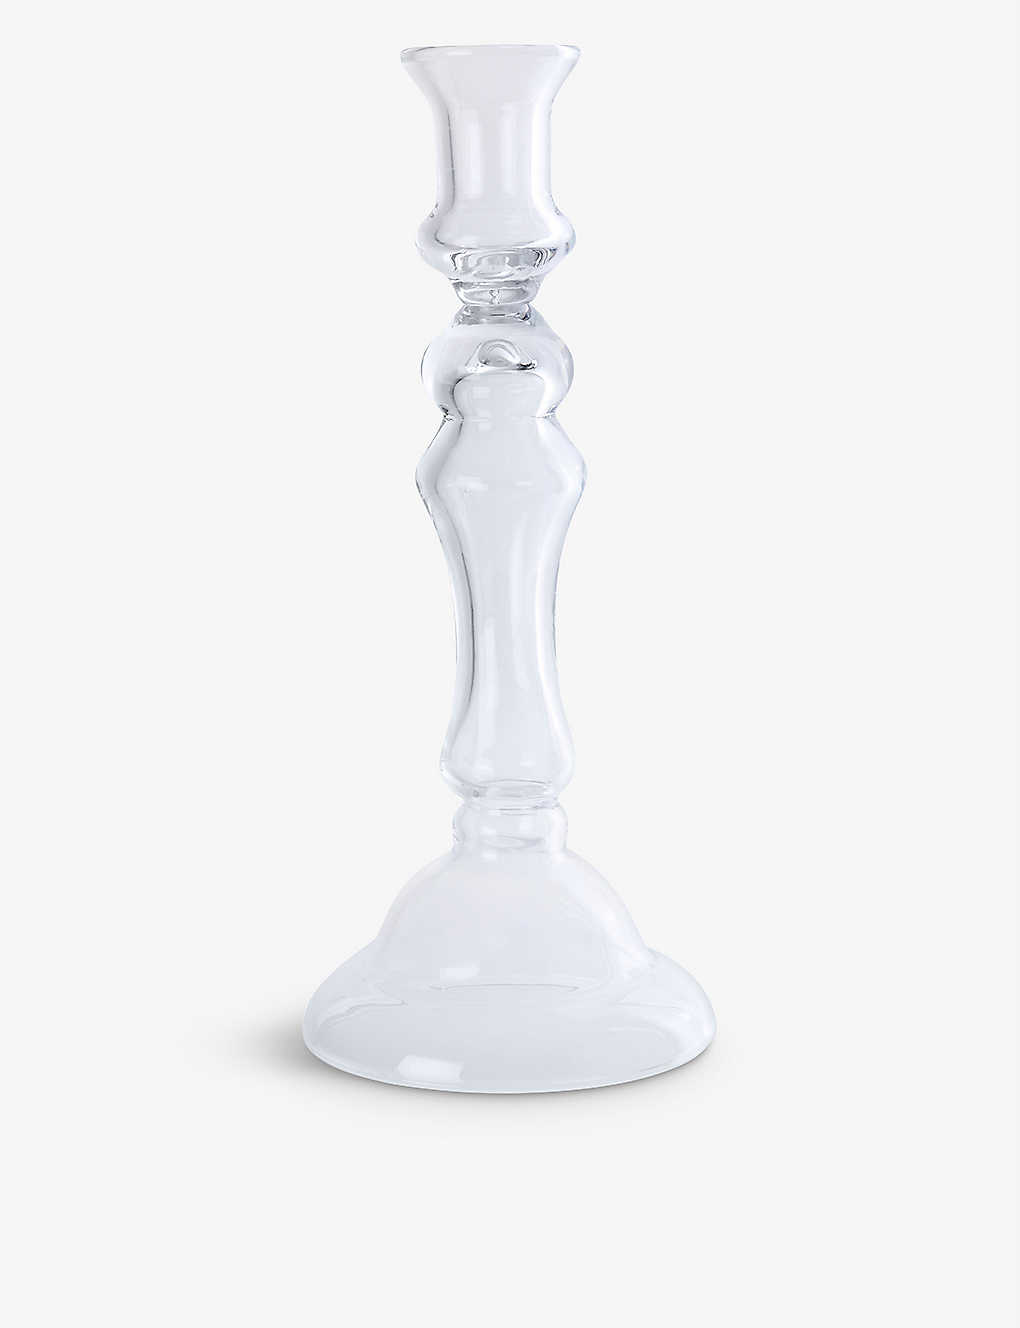 THE WHITE COMPANY フルーテッド クリスタルガラス キャンドルスティック 29.5cm Fluted crystal-glass candlestick 29.5cm CLEAR